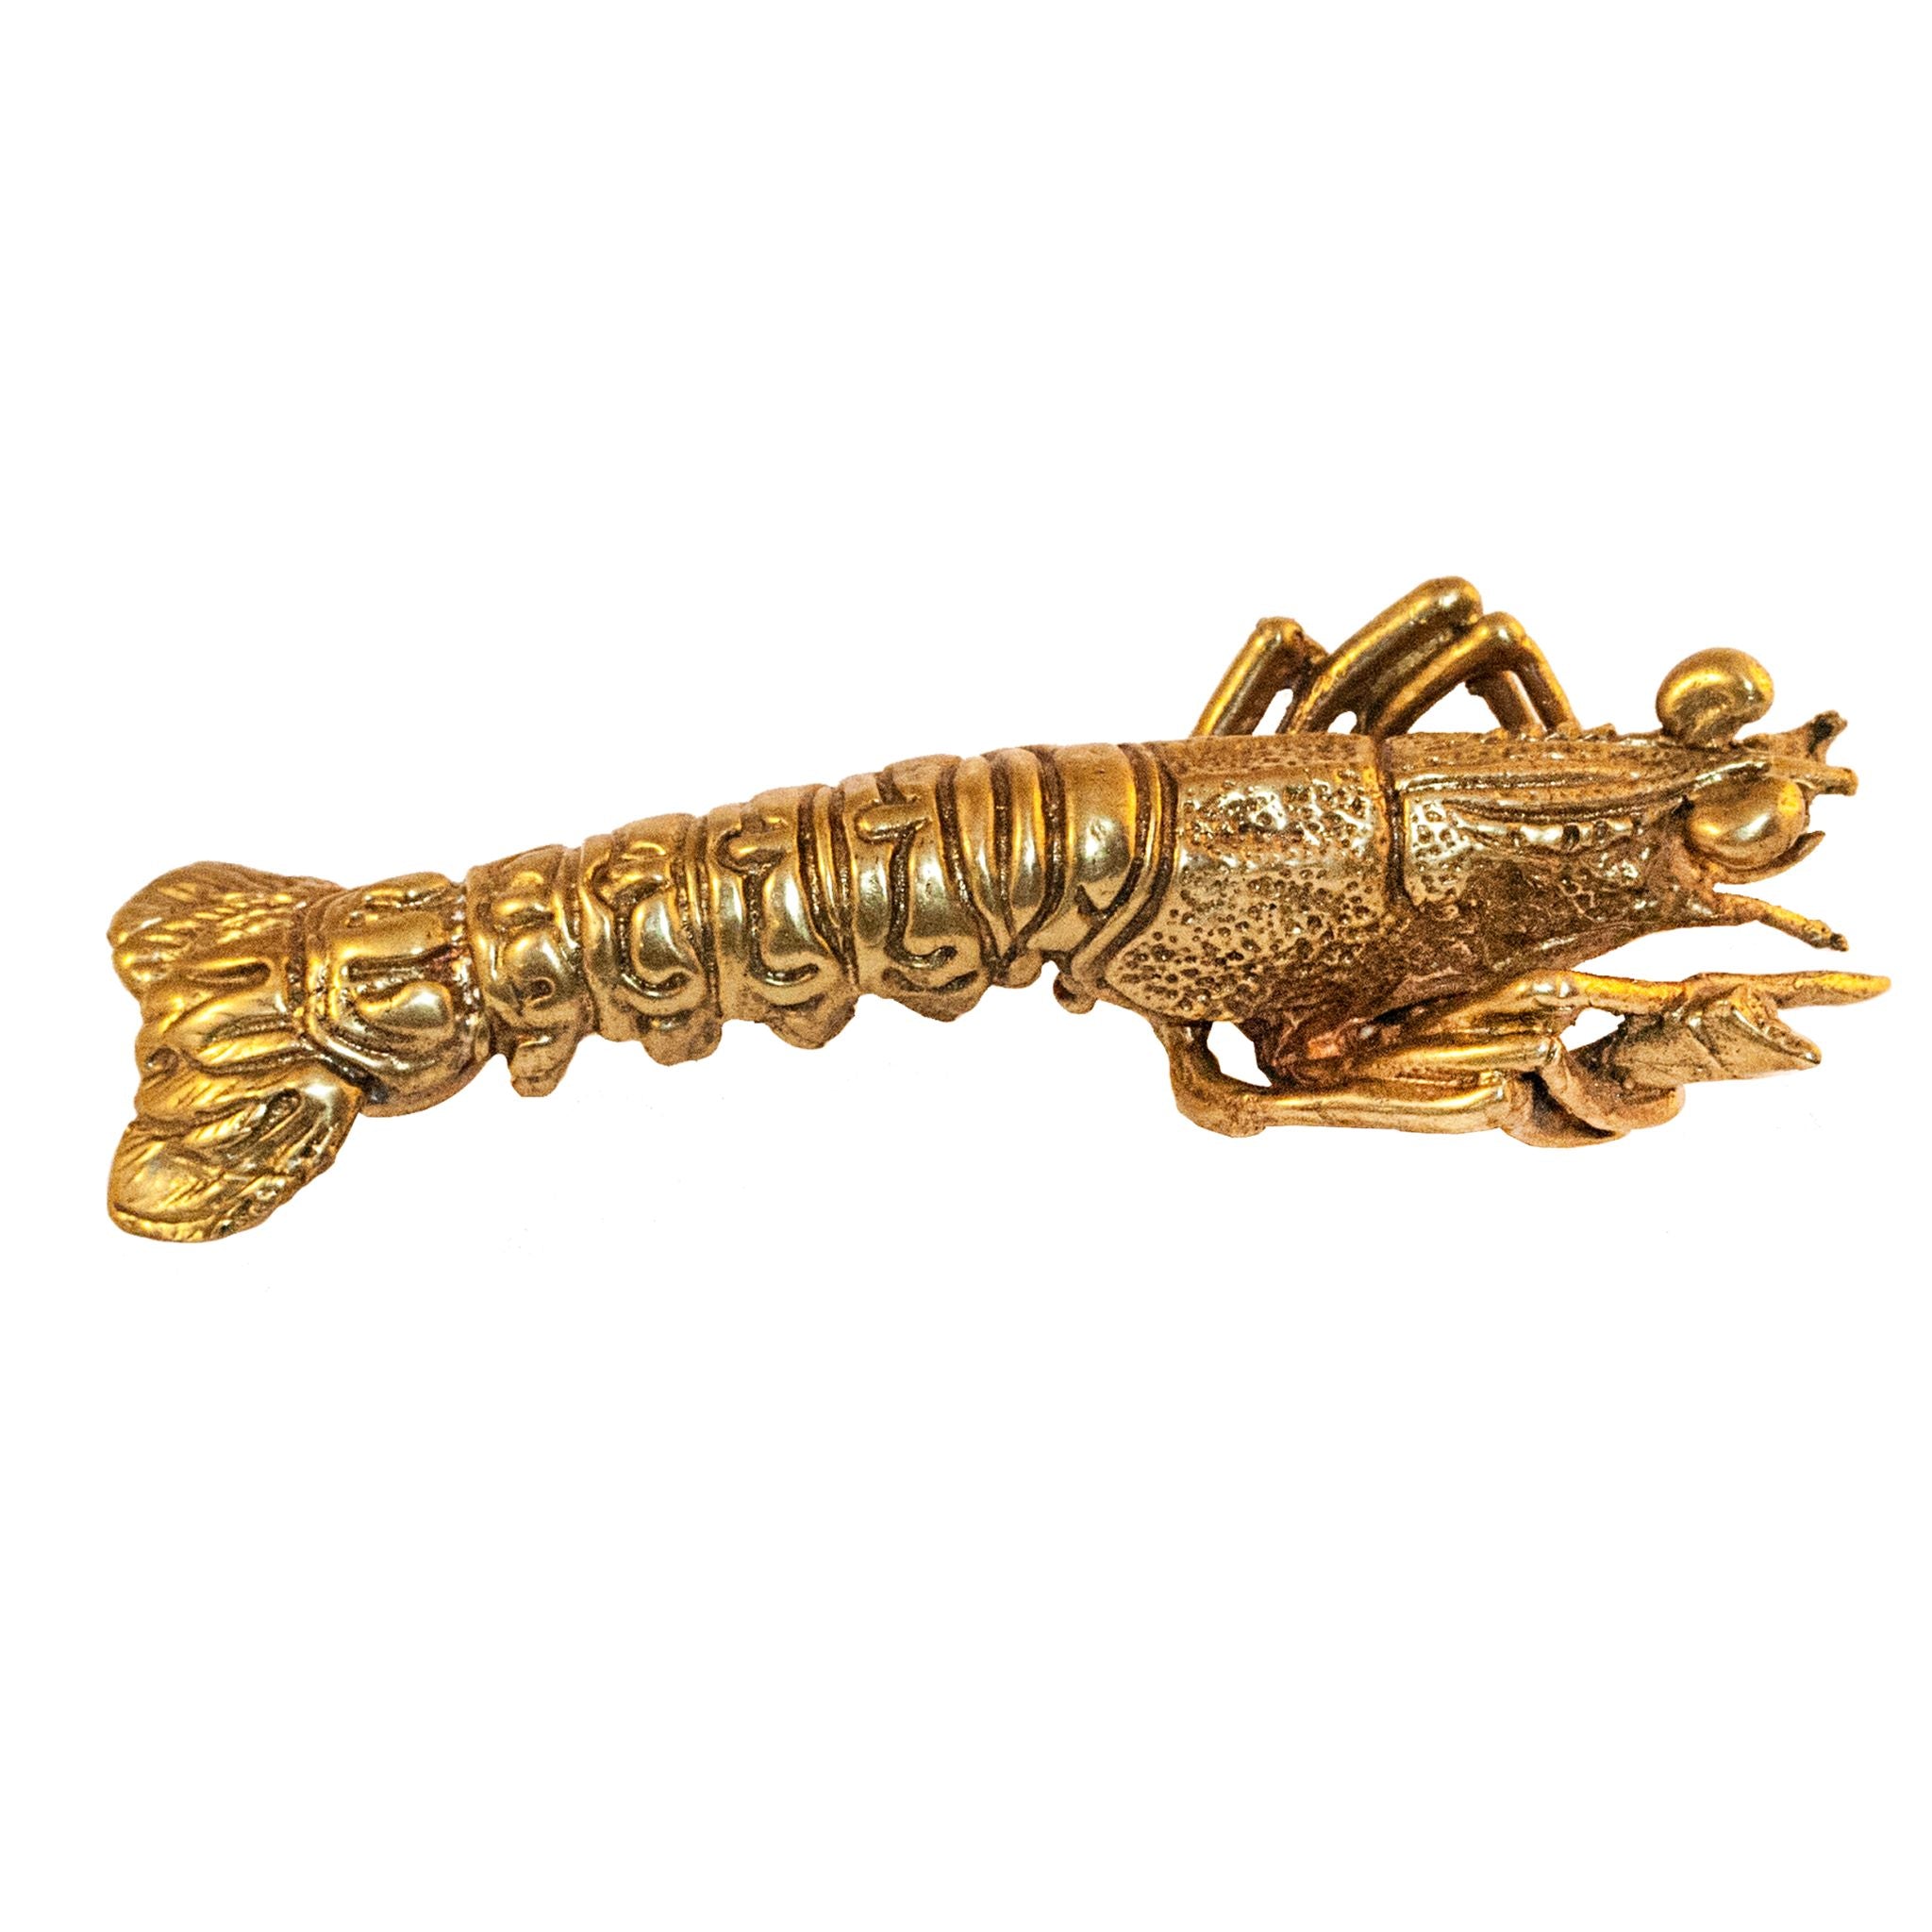 A brass knob shaped like a lobster.